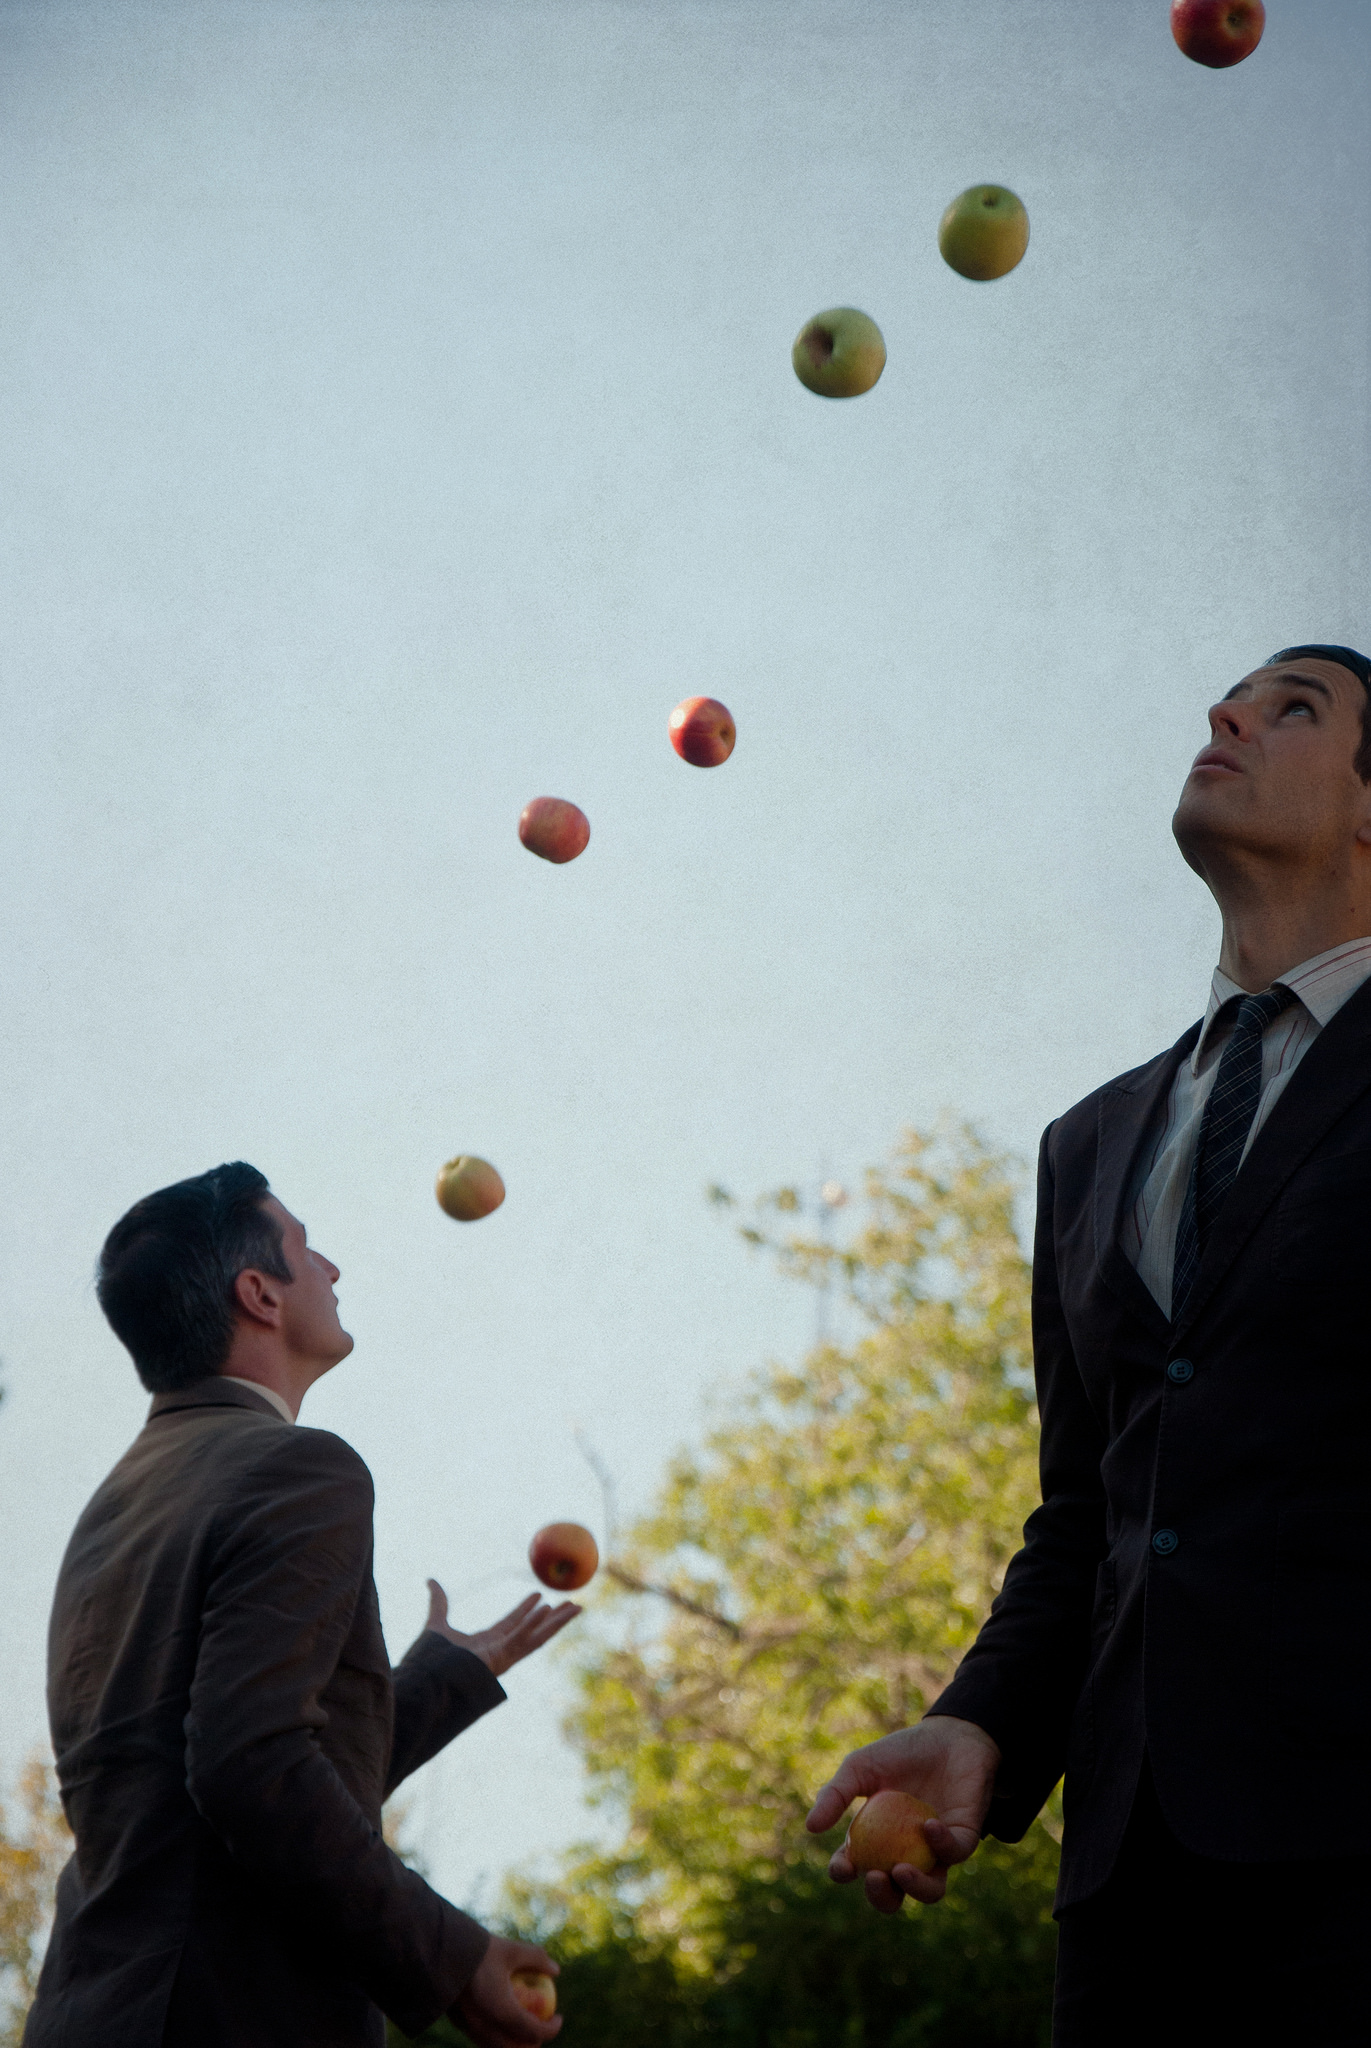 Two men wearing suites juggle apples